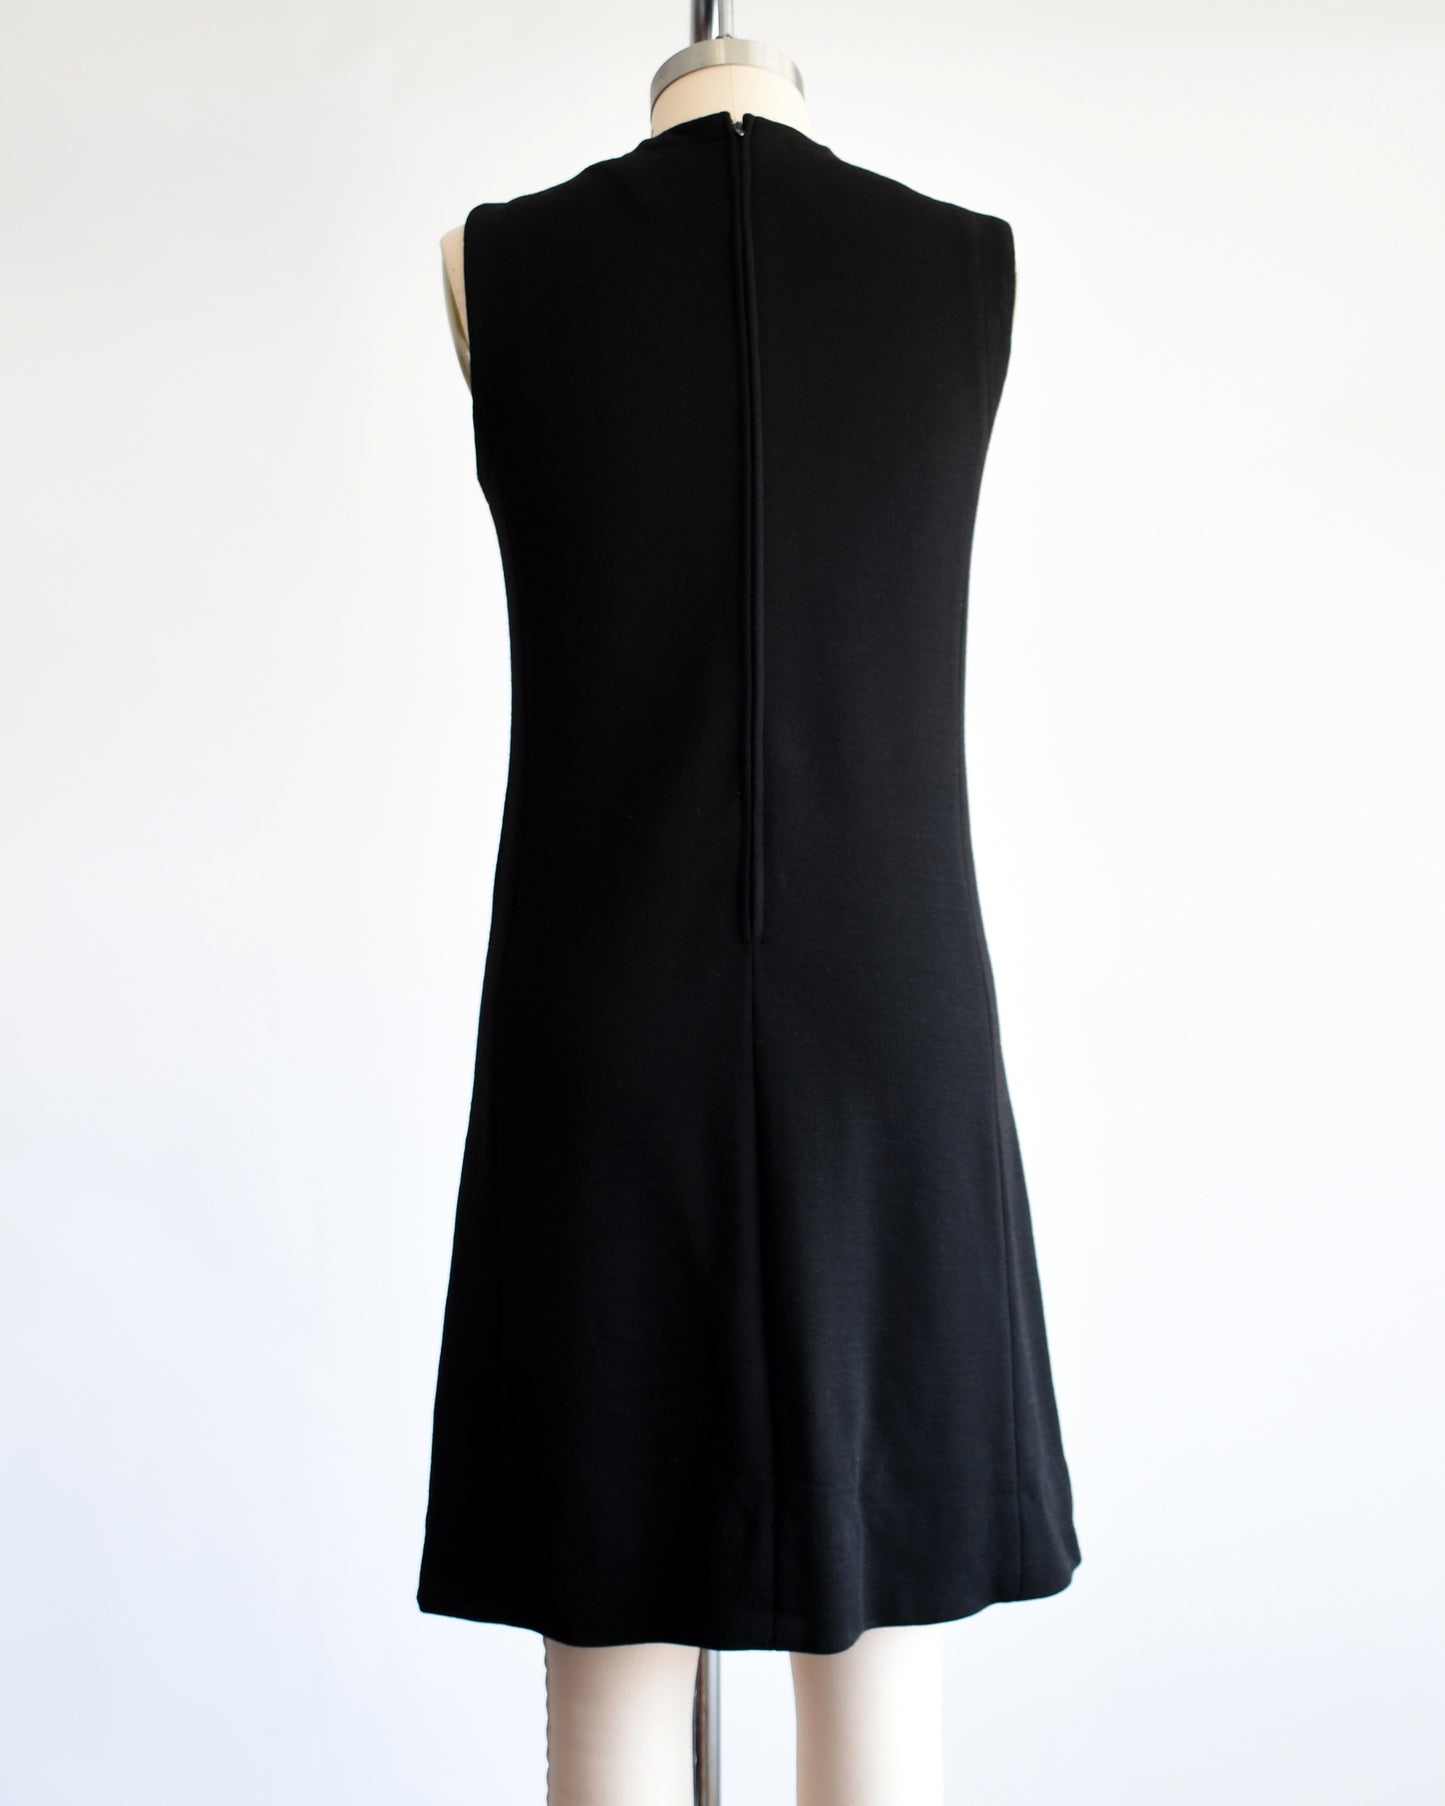 back view of  a vintage 1960s black keyhole rhinestone dress